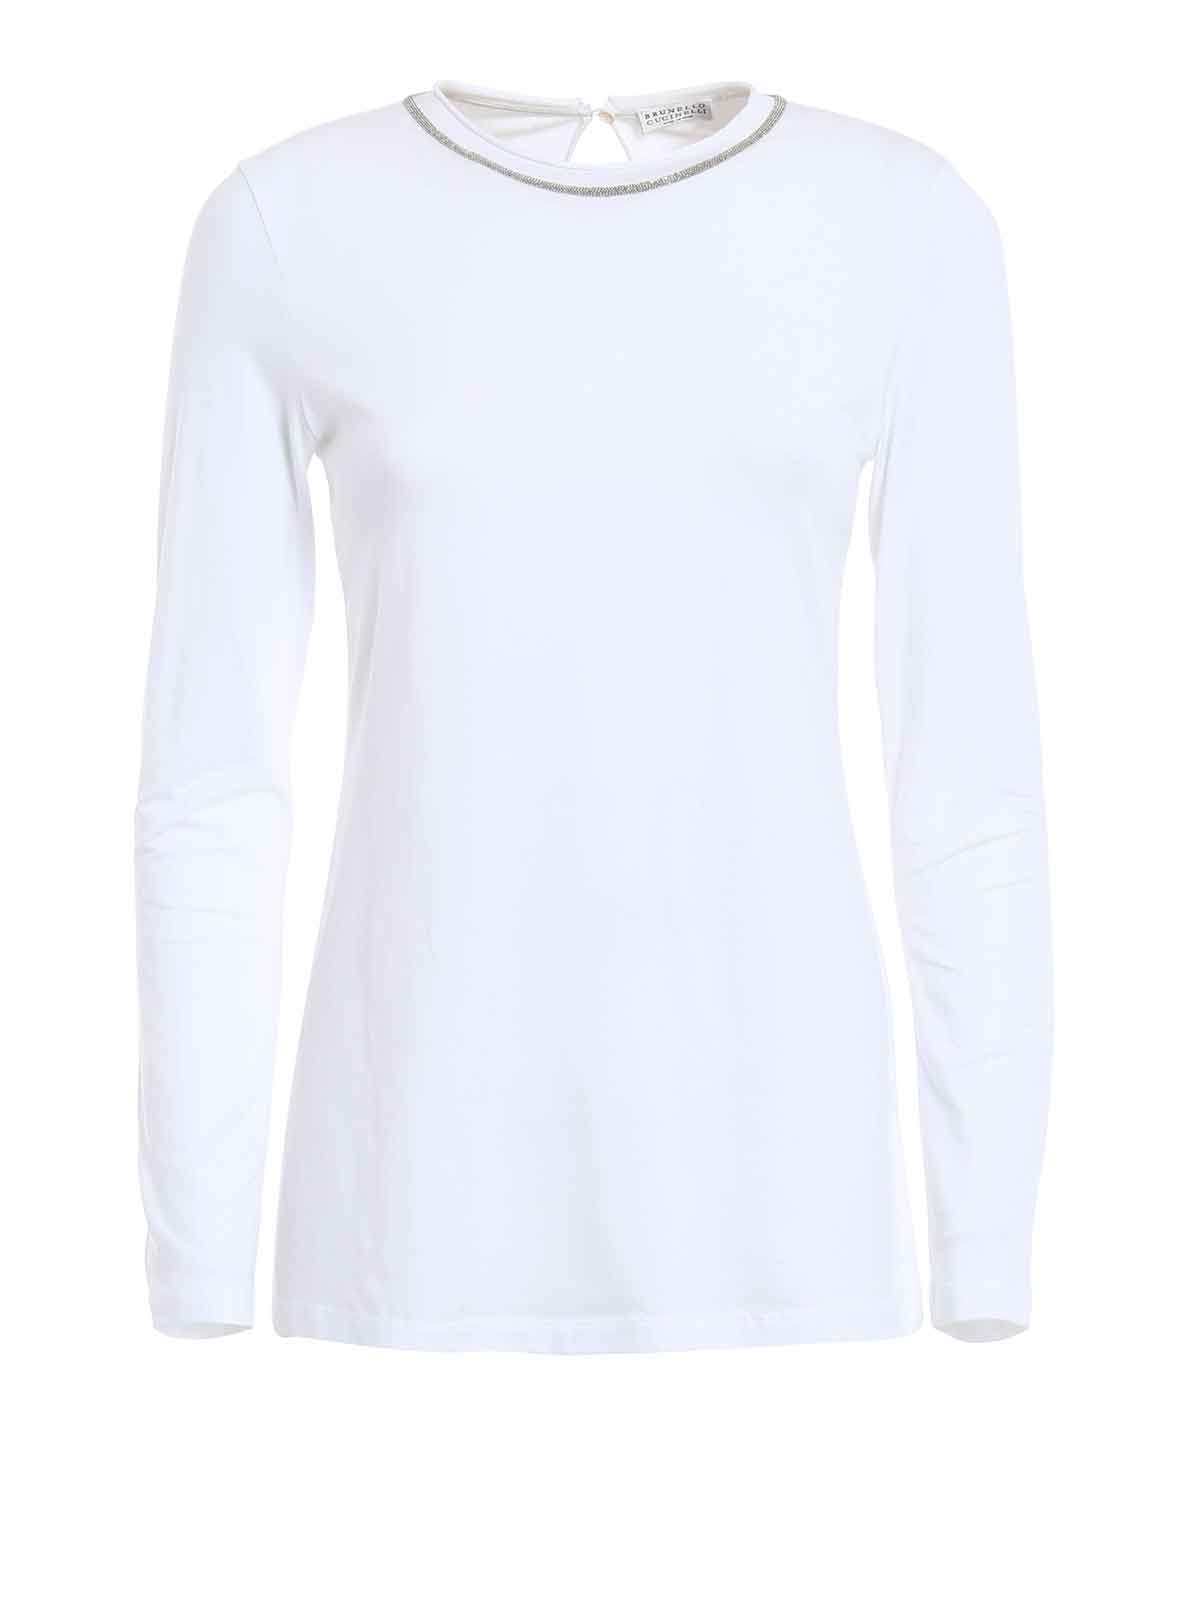 Tシャツ Brunello Cucinelli - Tシャツ レディース - 白 - M0T18B1100C159